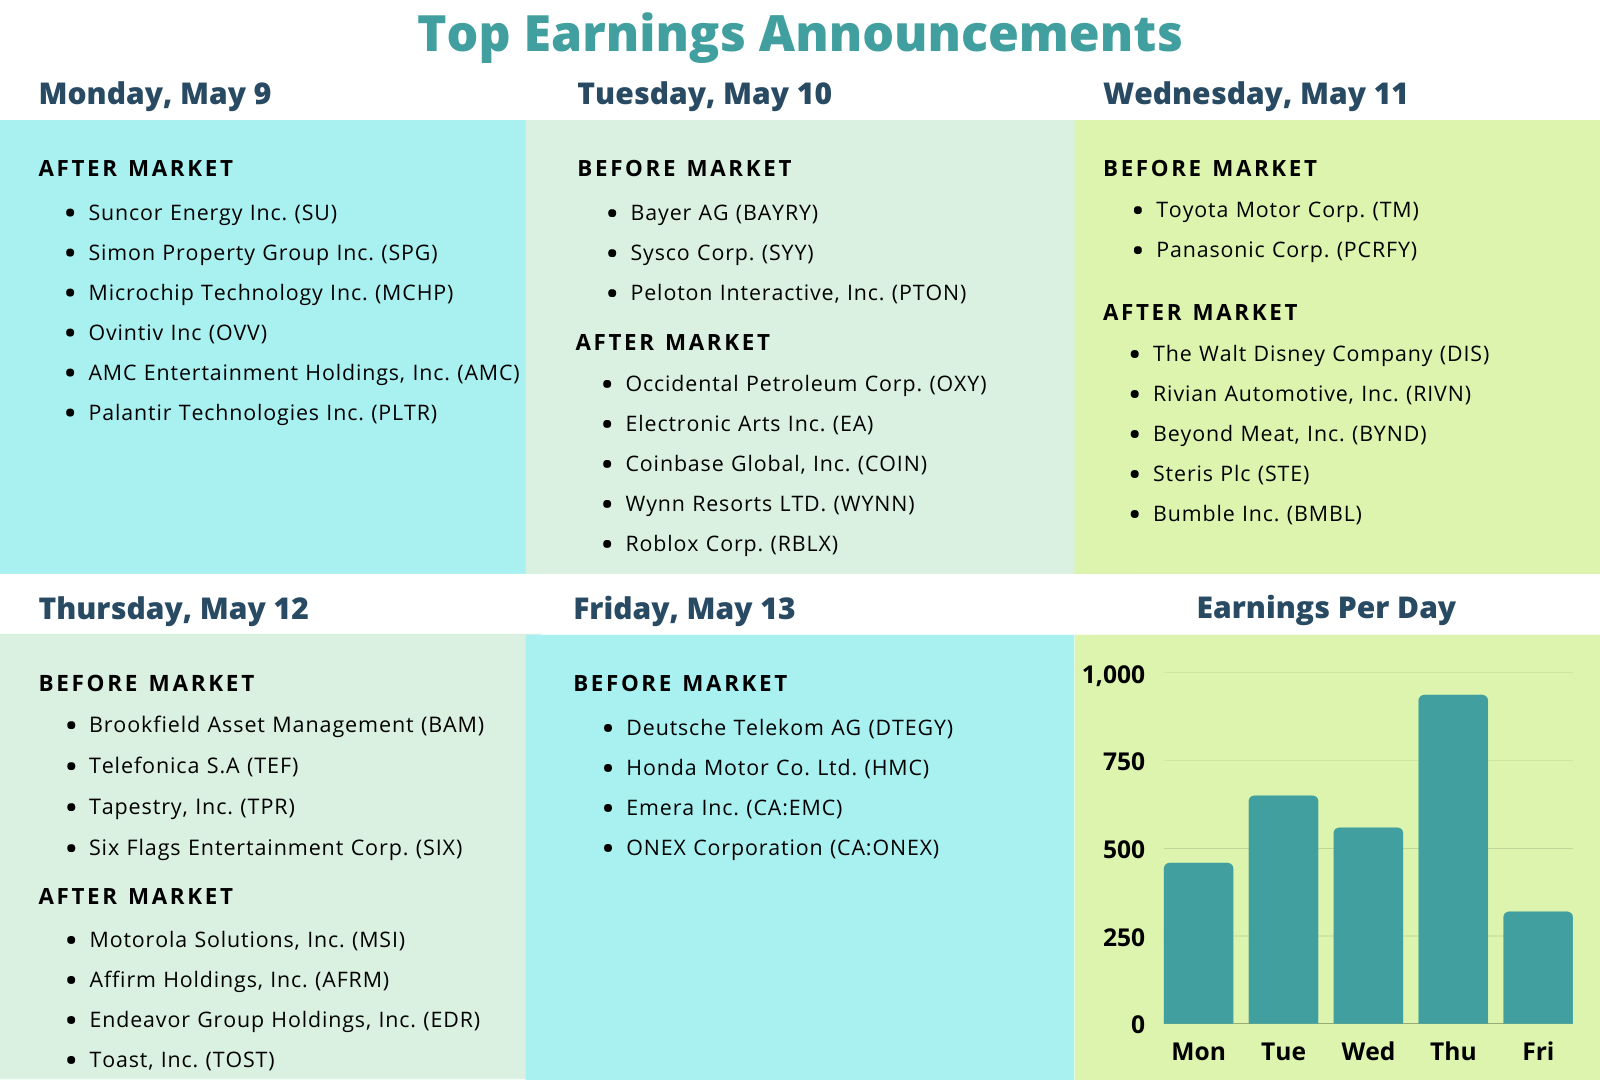 Top Earnings Announcements This Week